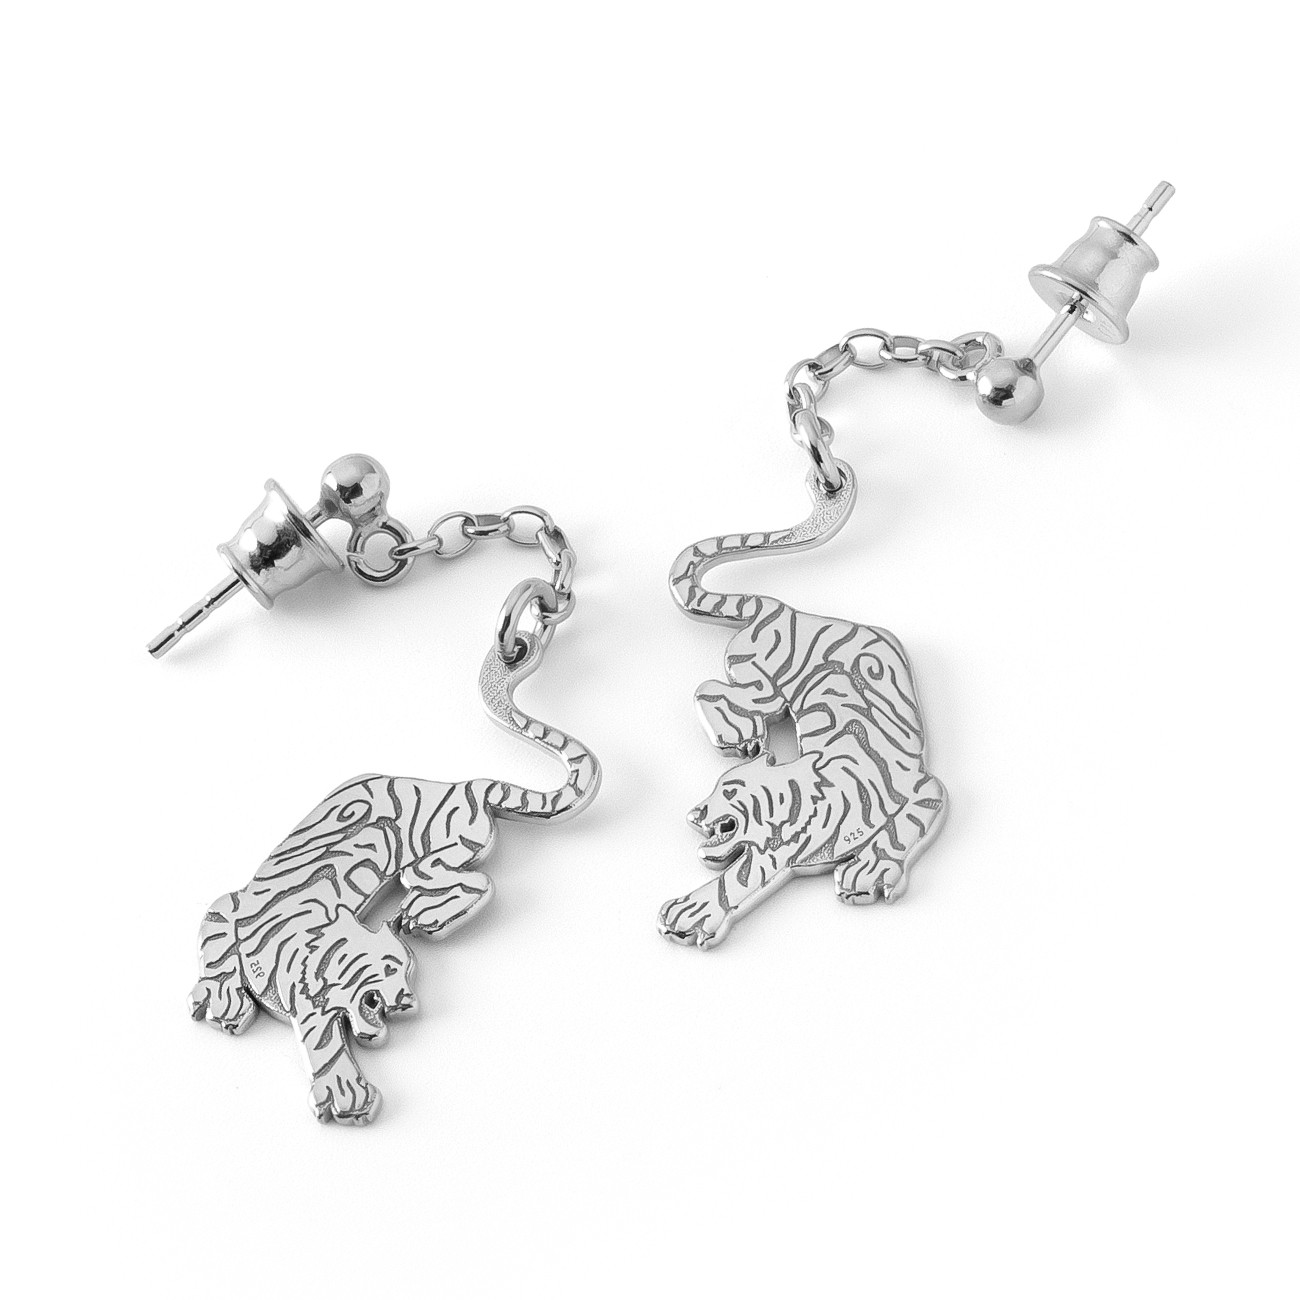 Silver tiger earrings, AUGUSTYNKA x GIORRE